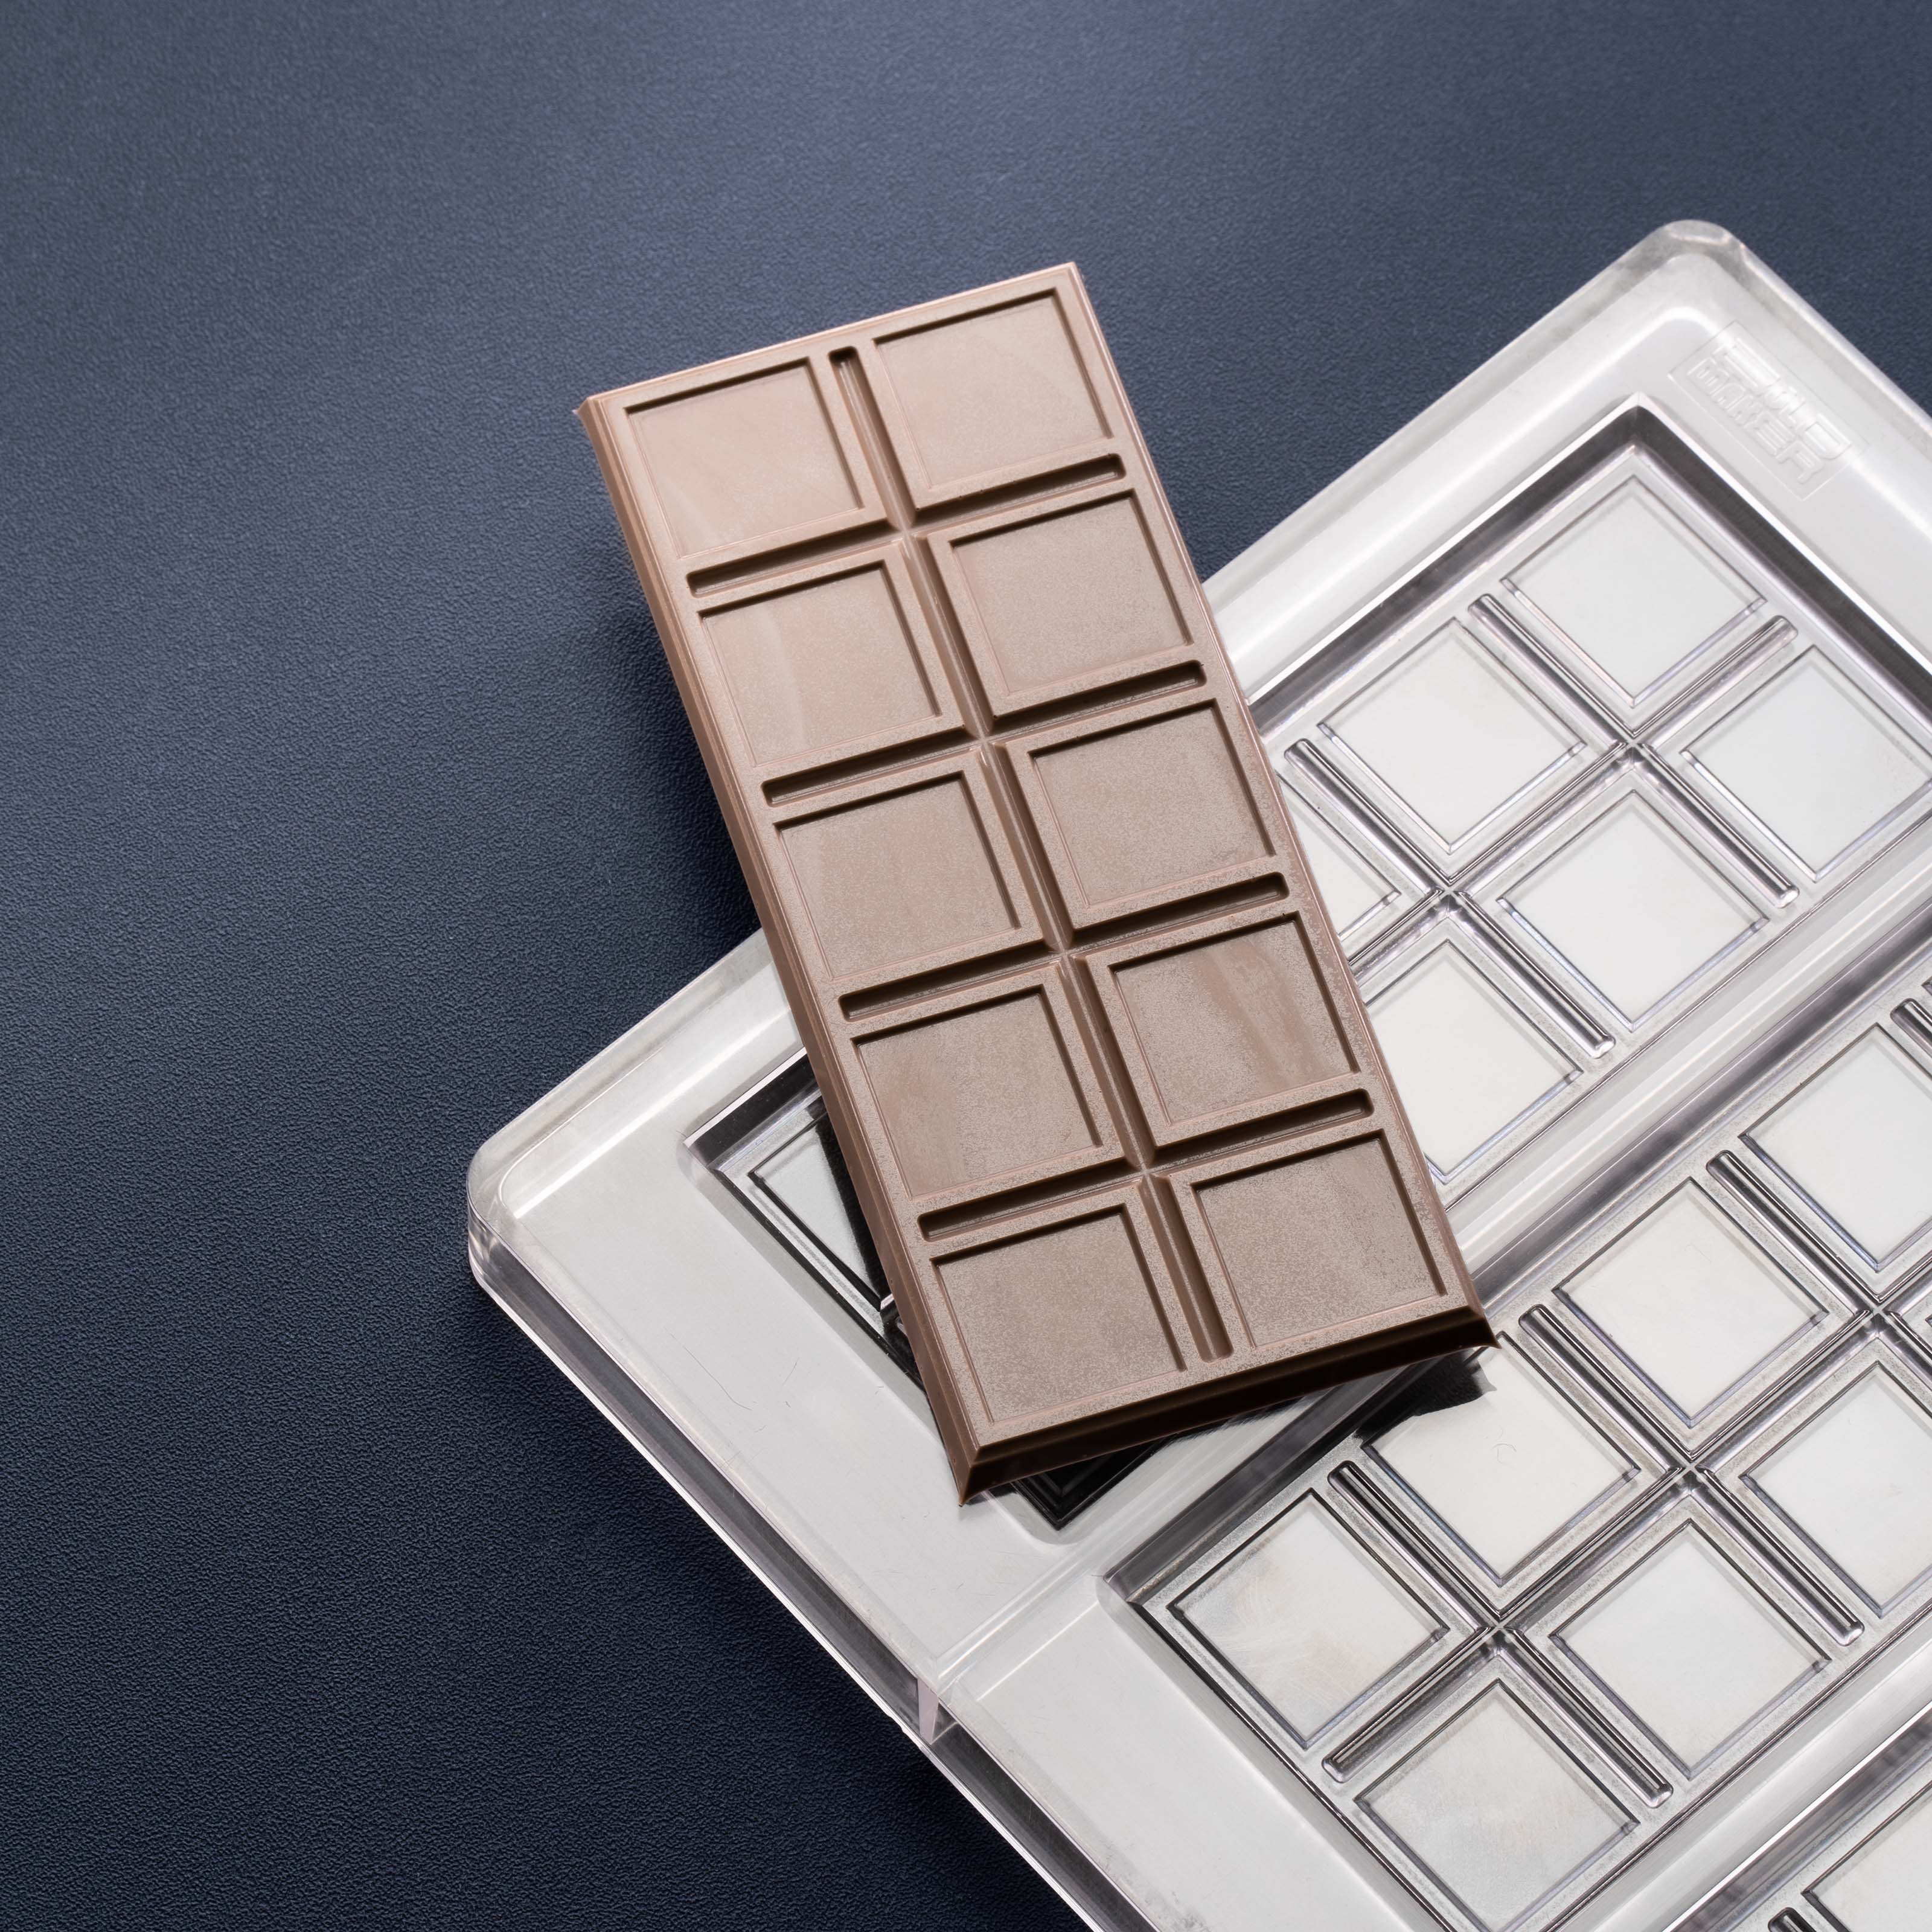 Bold Maker Studio Polycarbonate Chocolate Bar Mold - Mushroom Symbol - 50ml 10 Piece for Candy, Chocolate Bars, Baking PMUL1